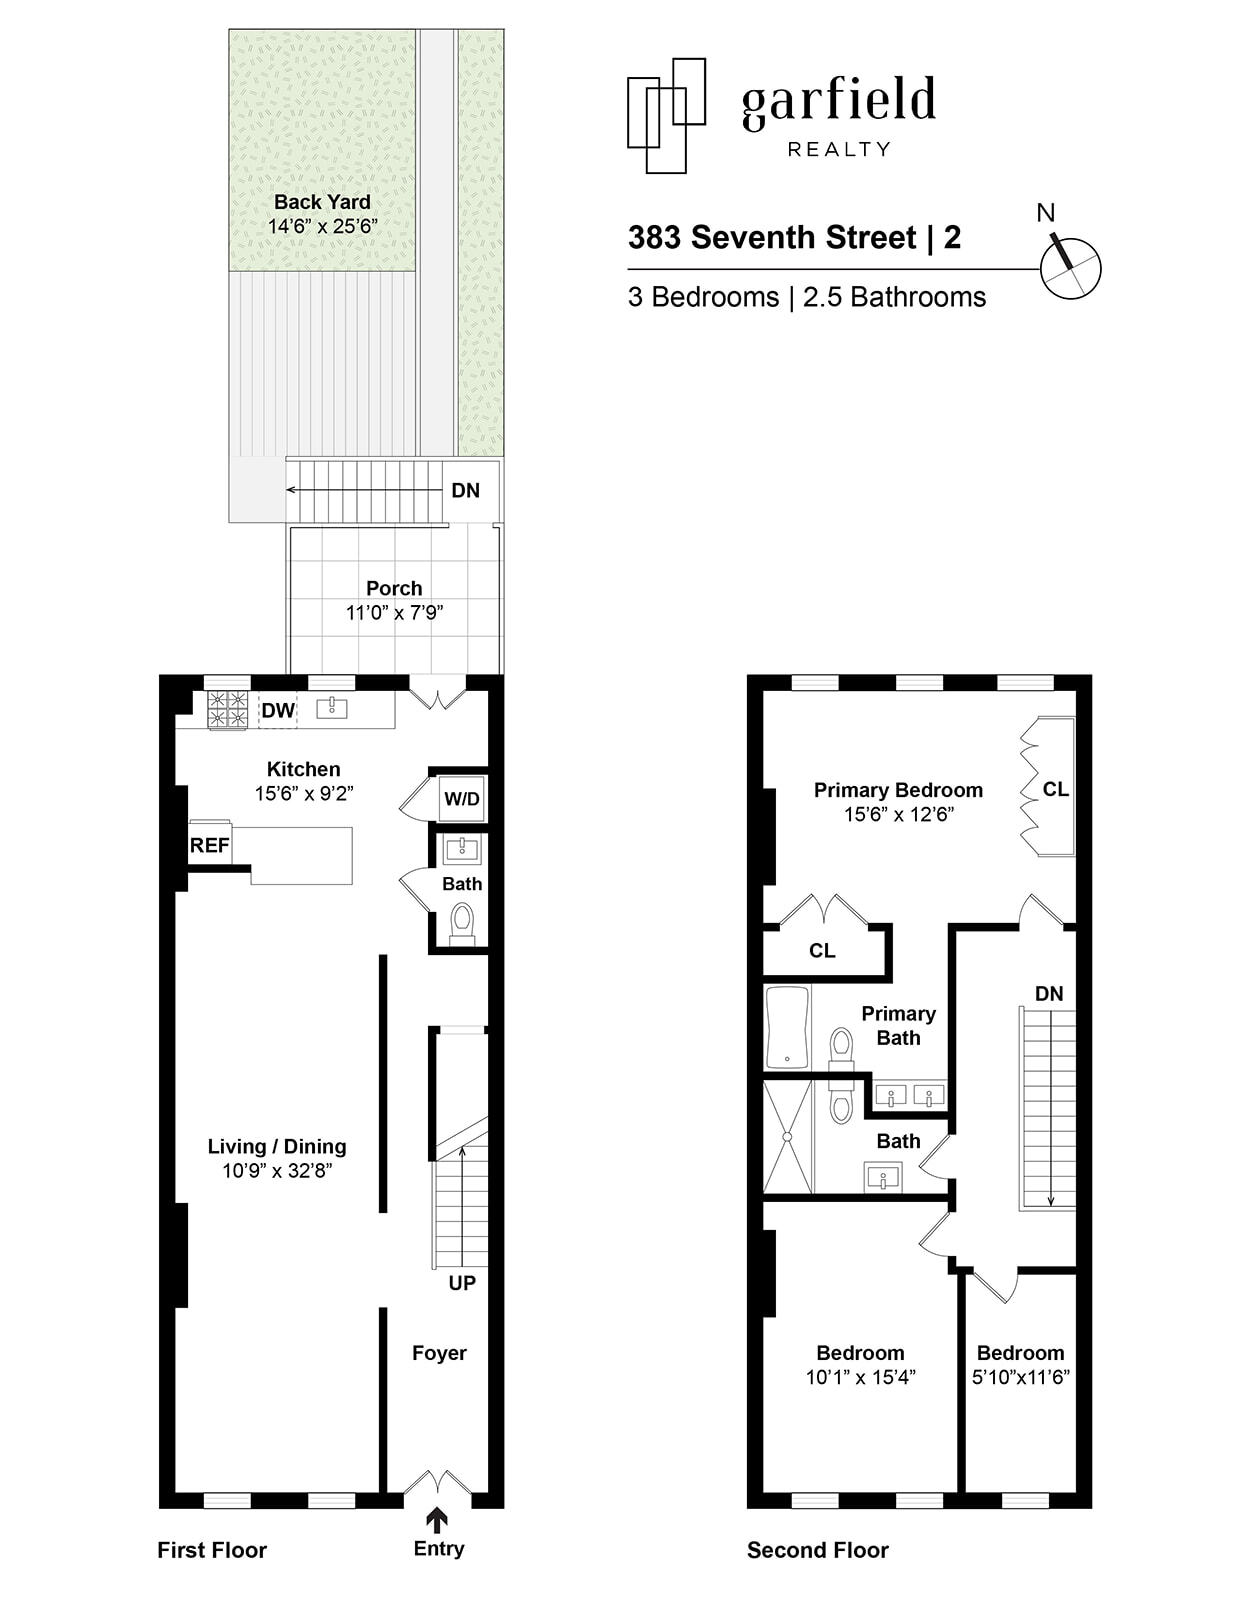 Floorplan of 383 7th St